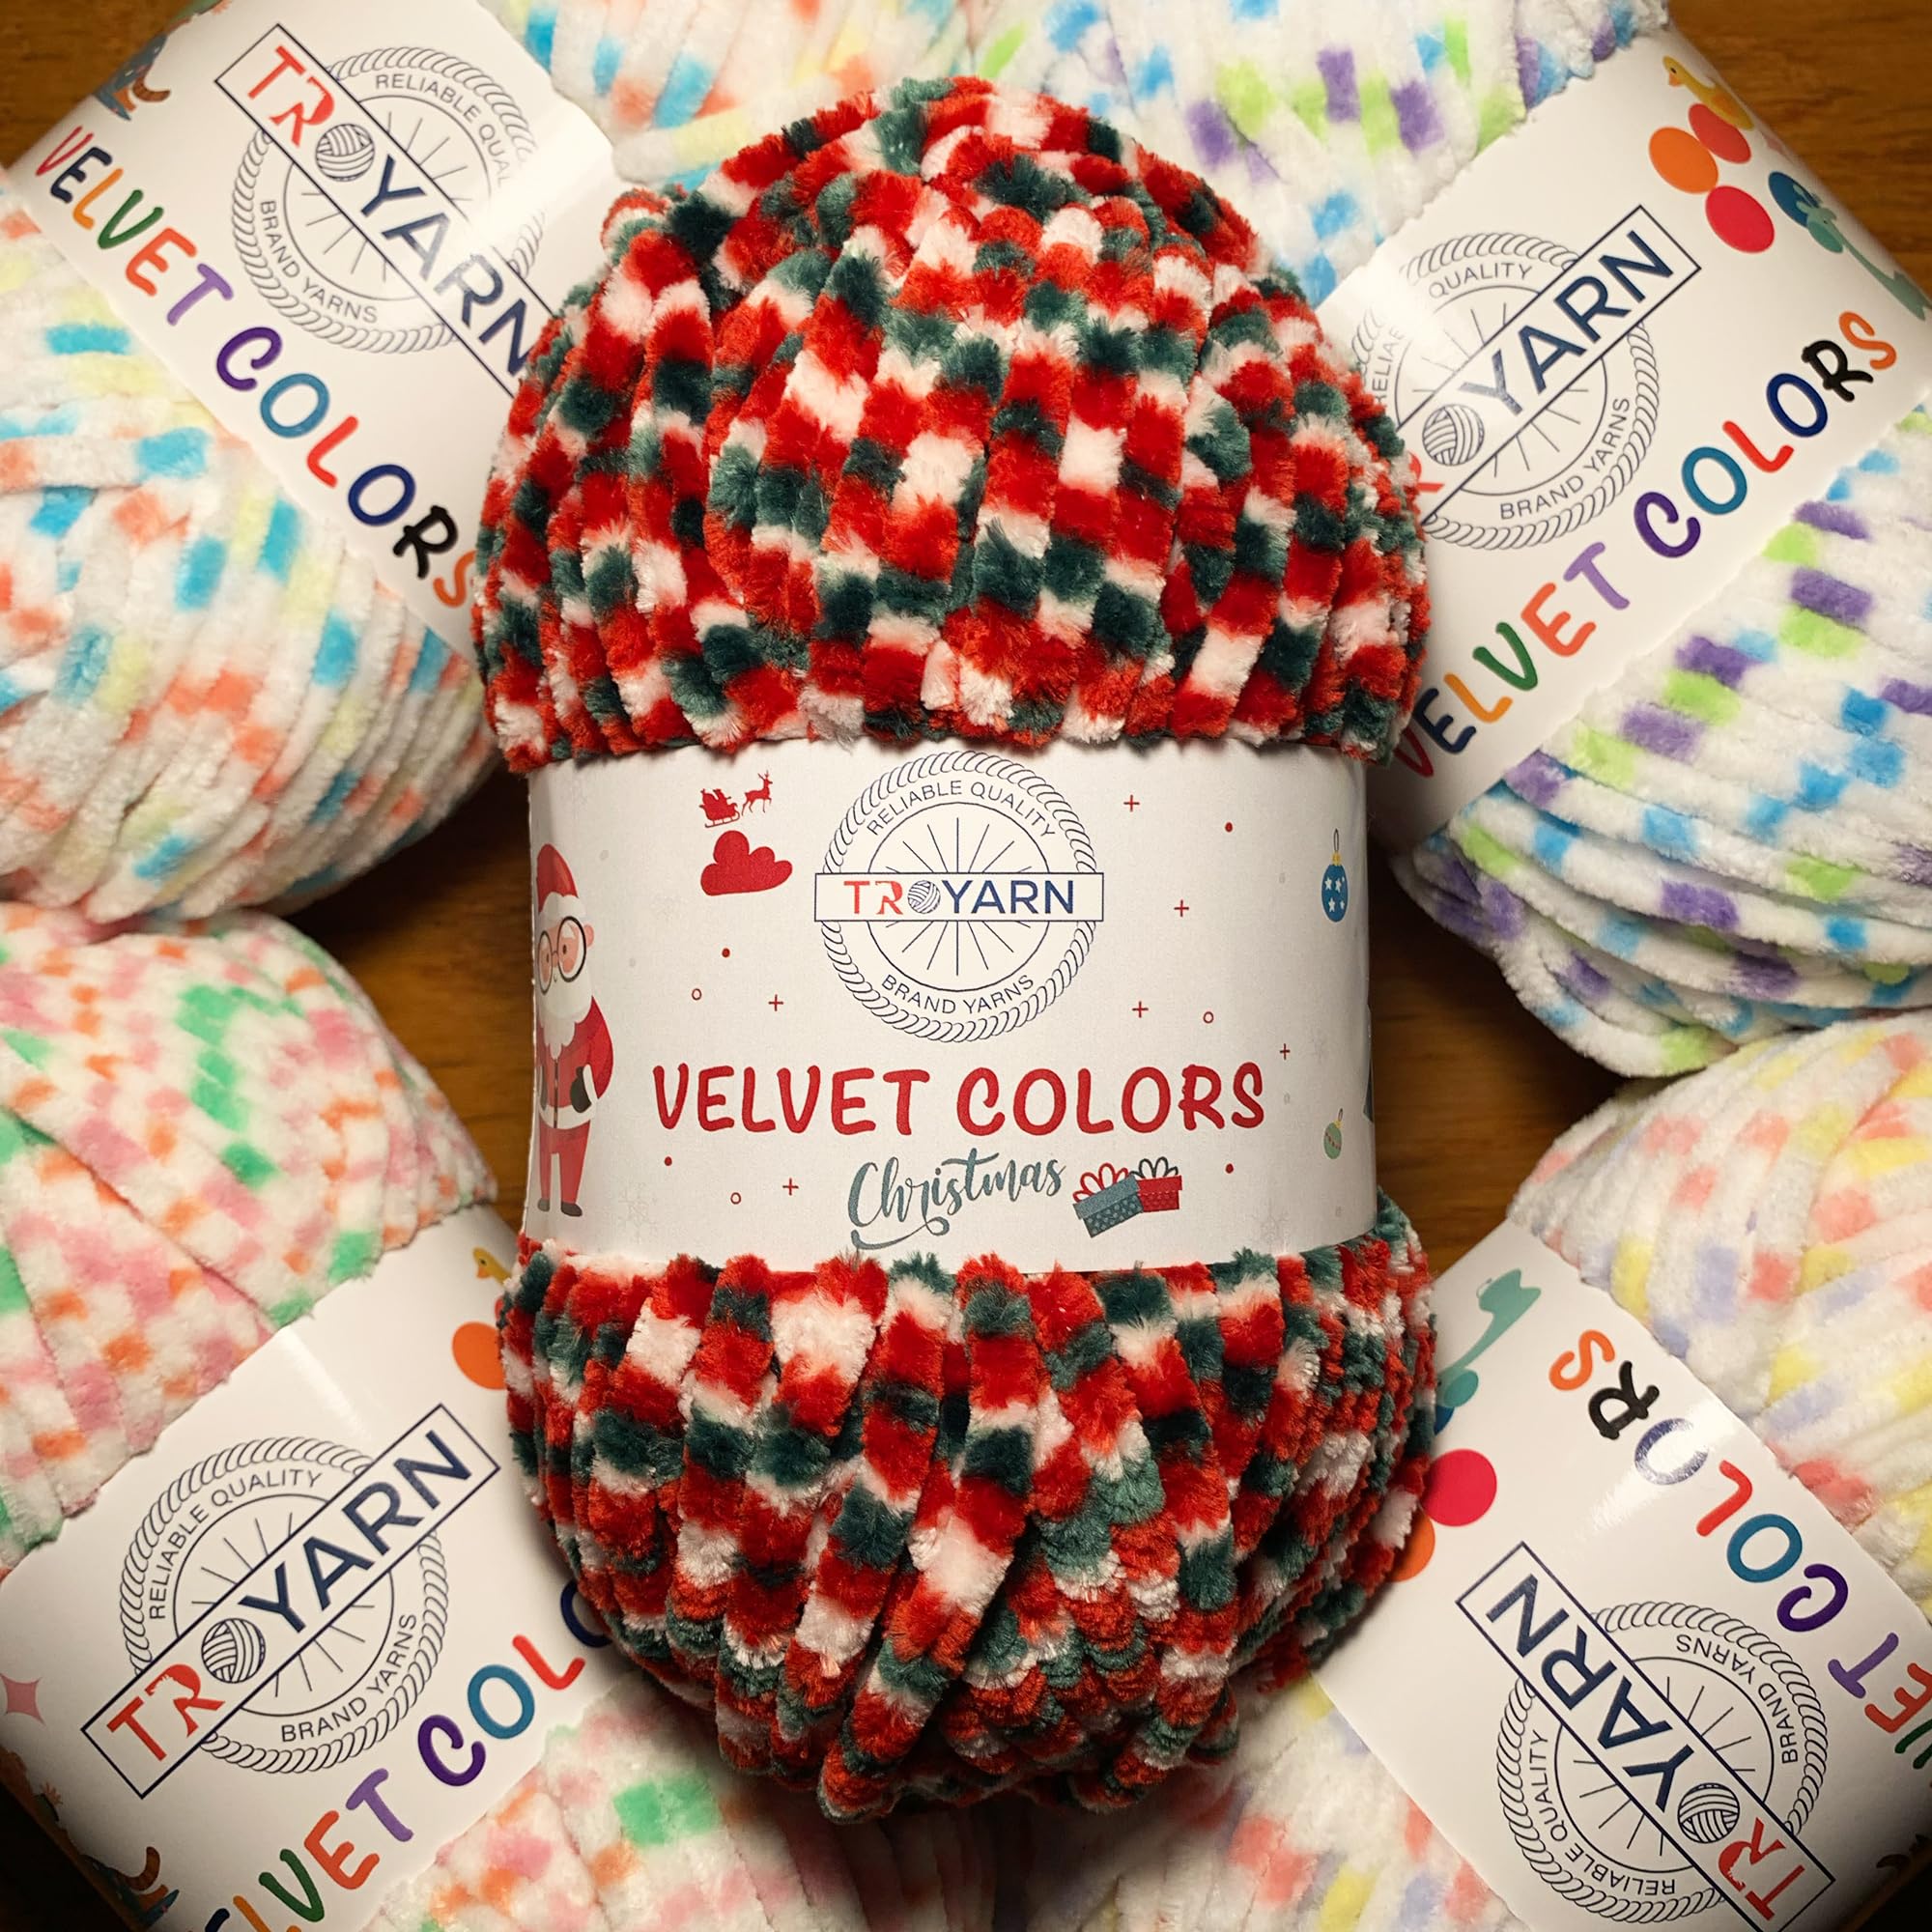 Troyarn Velvet Colors Chenille Baby Blanket Yarn Amigurumi Yarn for Crocheting and Knitting Super Bulky 100 gr (131 yds) (10220)